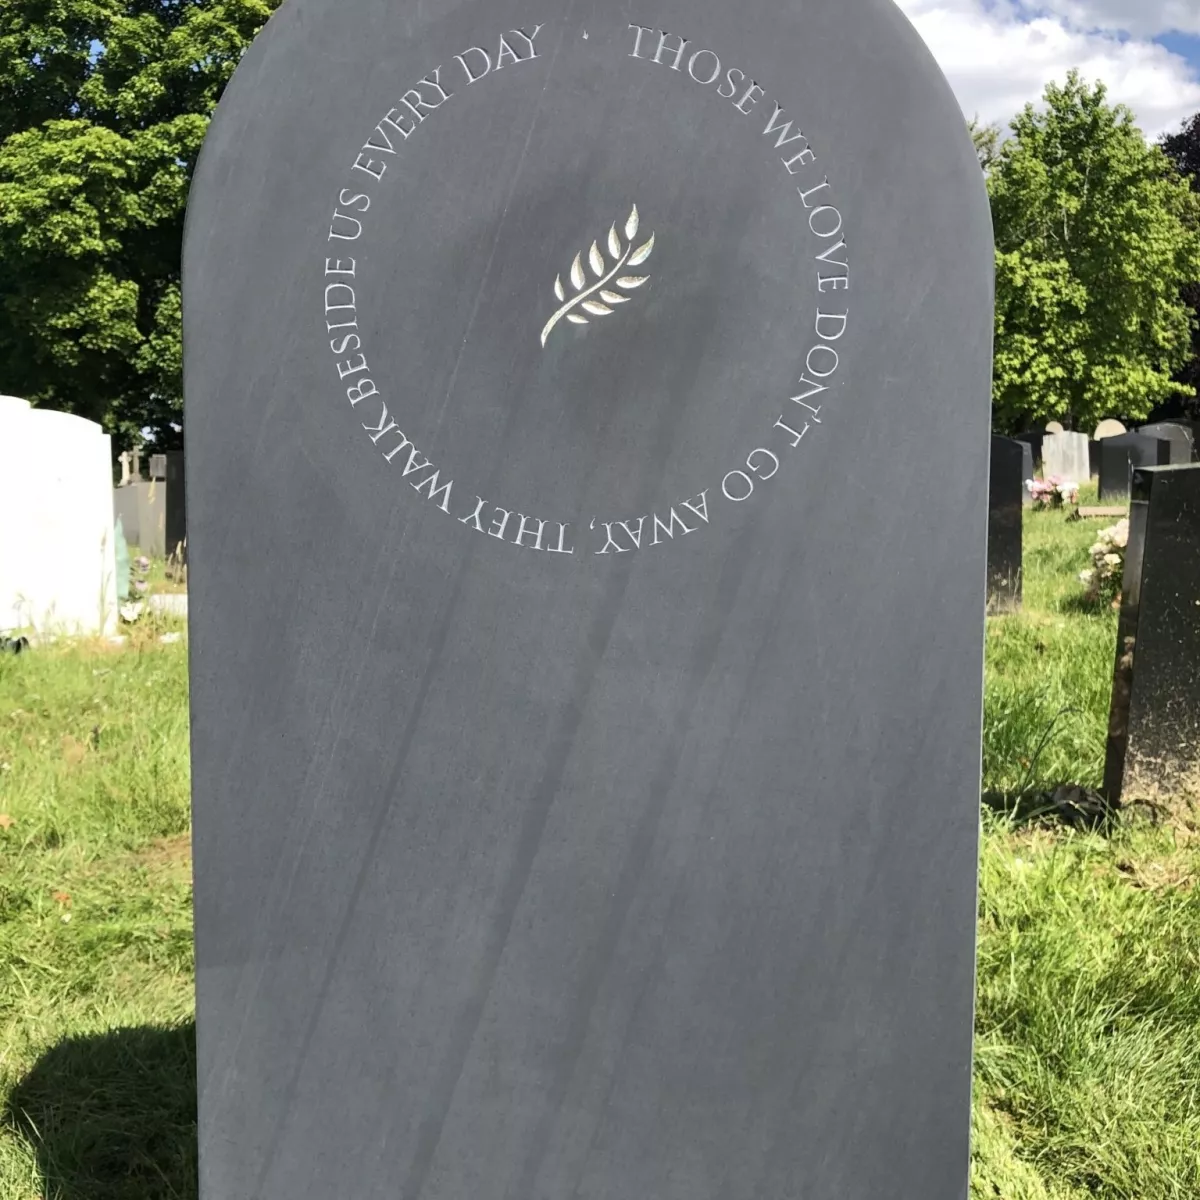 Headstone epitaph